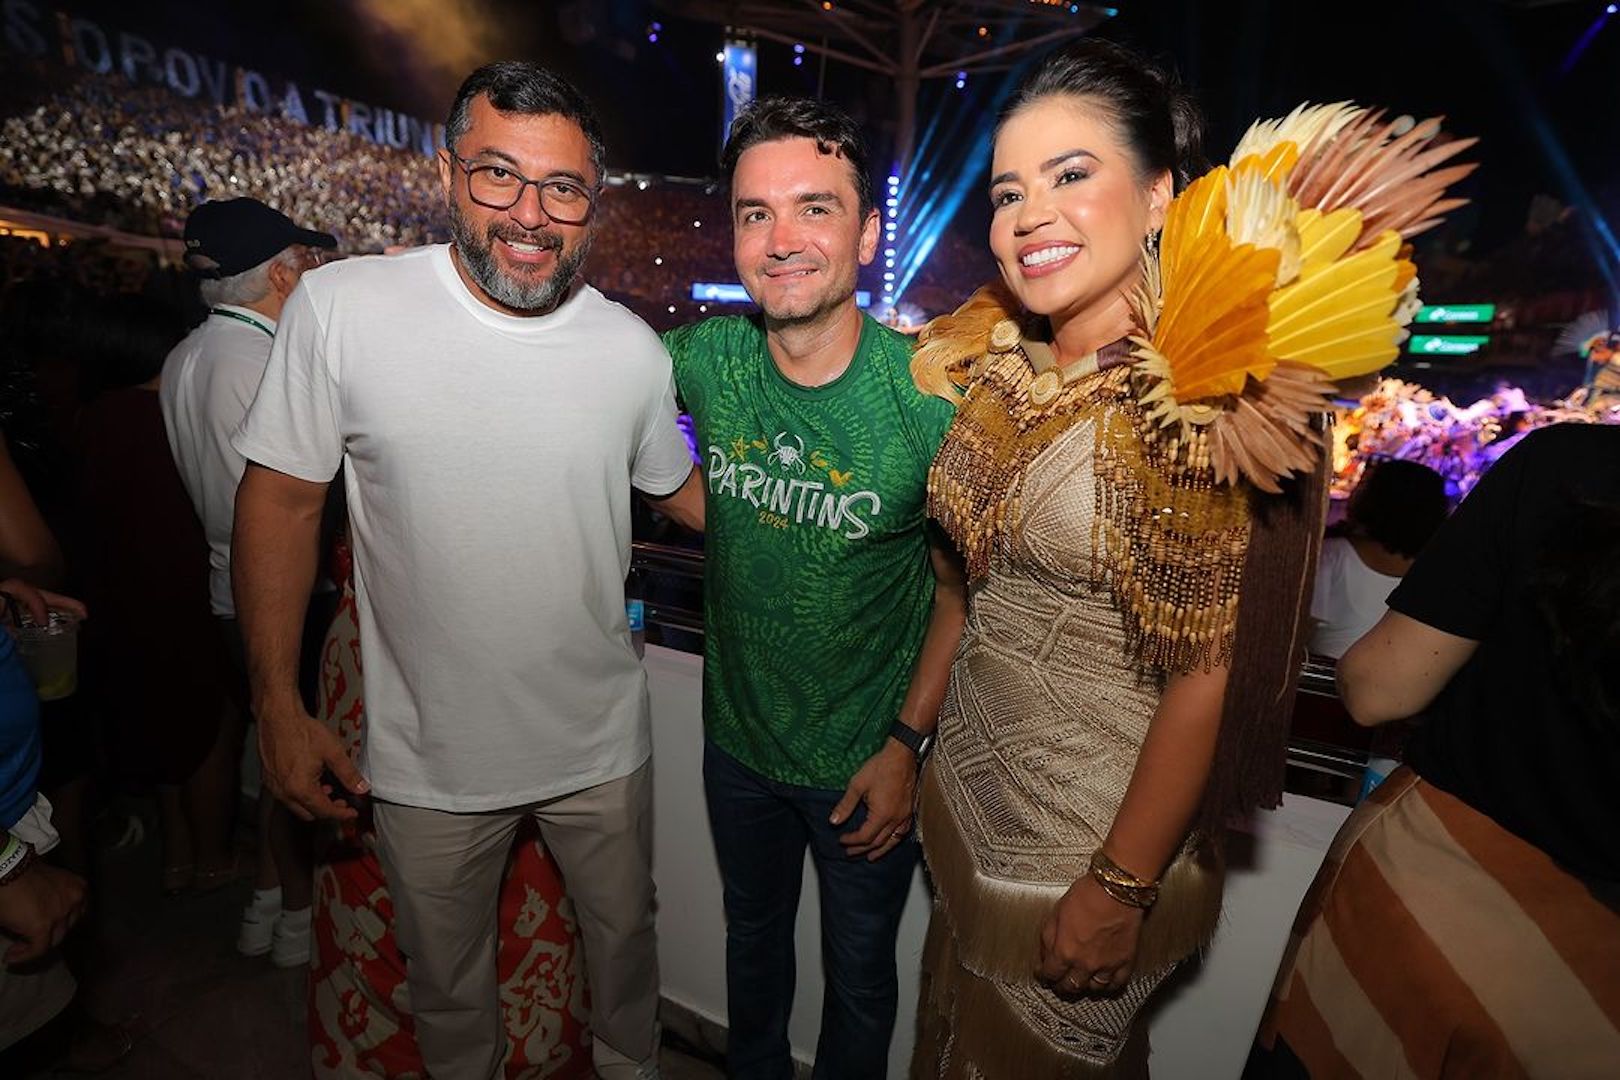 O governador do Amazonas, Wilson Lima (esq.), o ministro do Turismo, Celso Sabino (centro) e a primeira-dama do Amazonas, Taiana Lima (dir.)